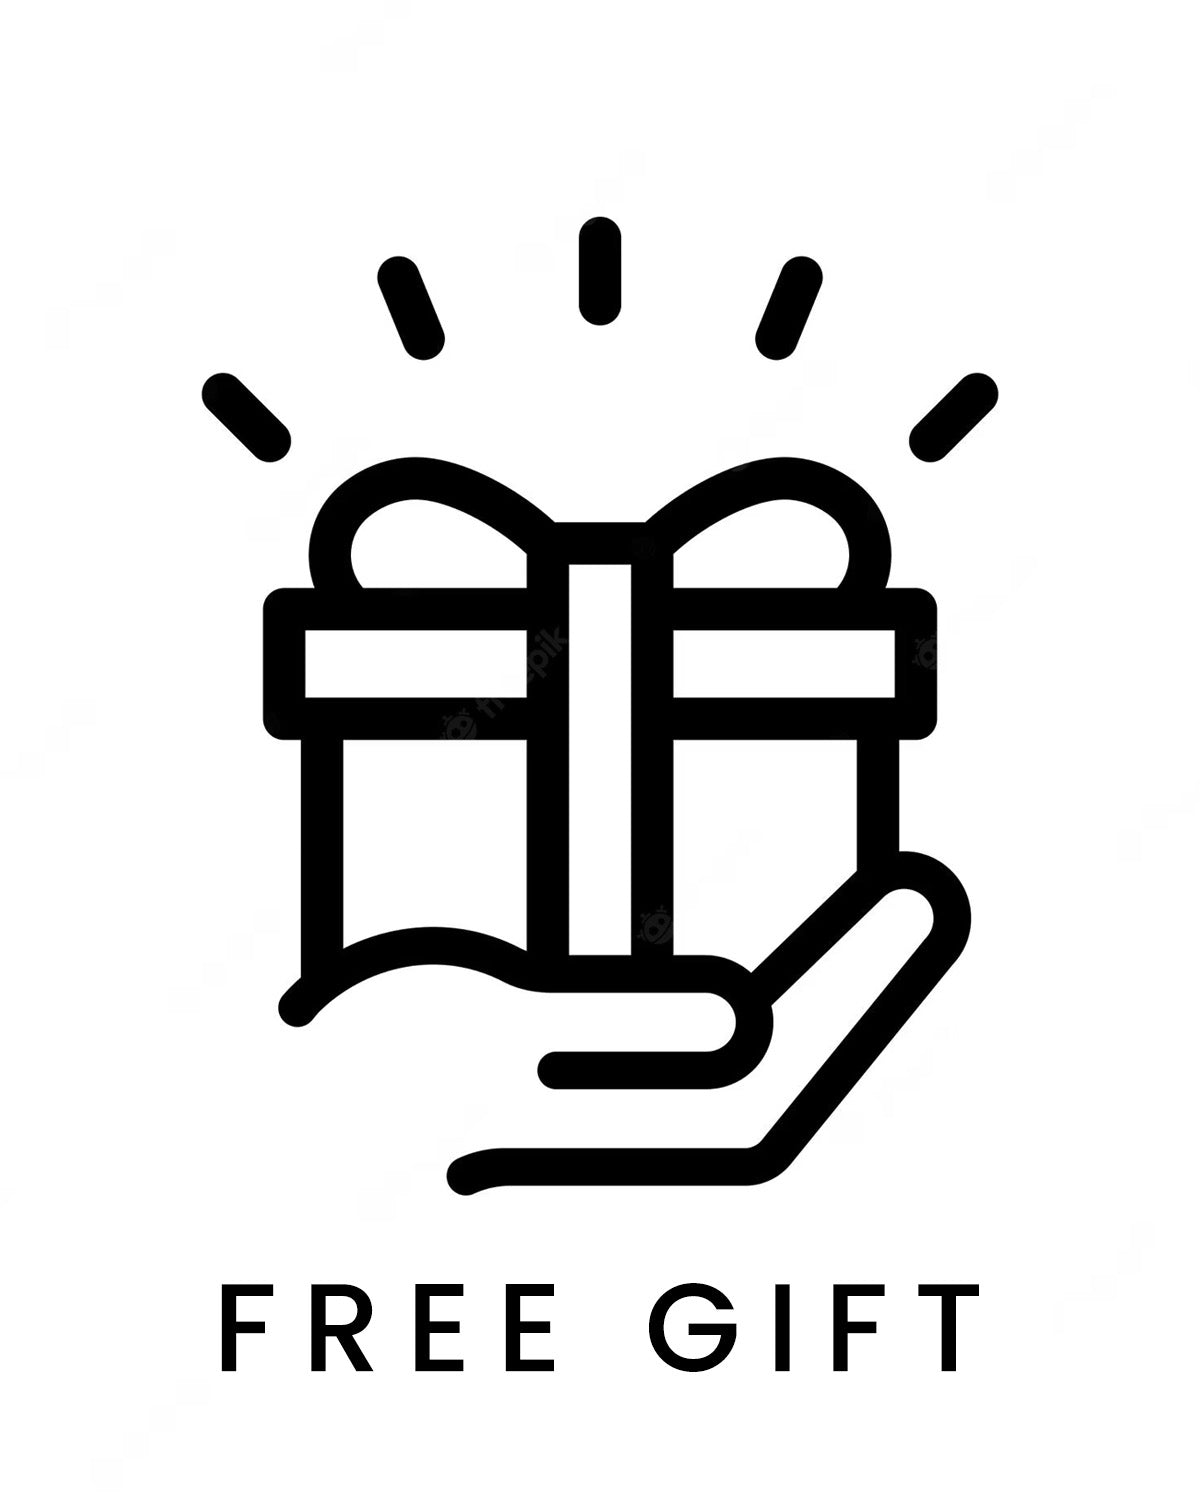 Free Gift - By Samii Ryan 